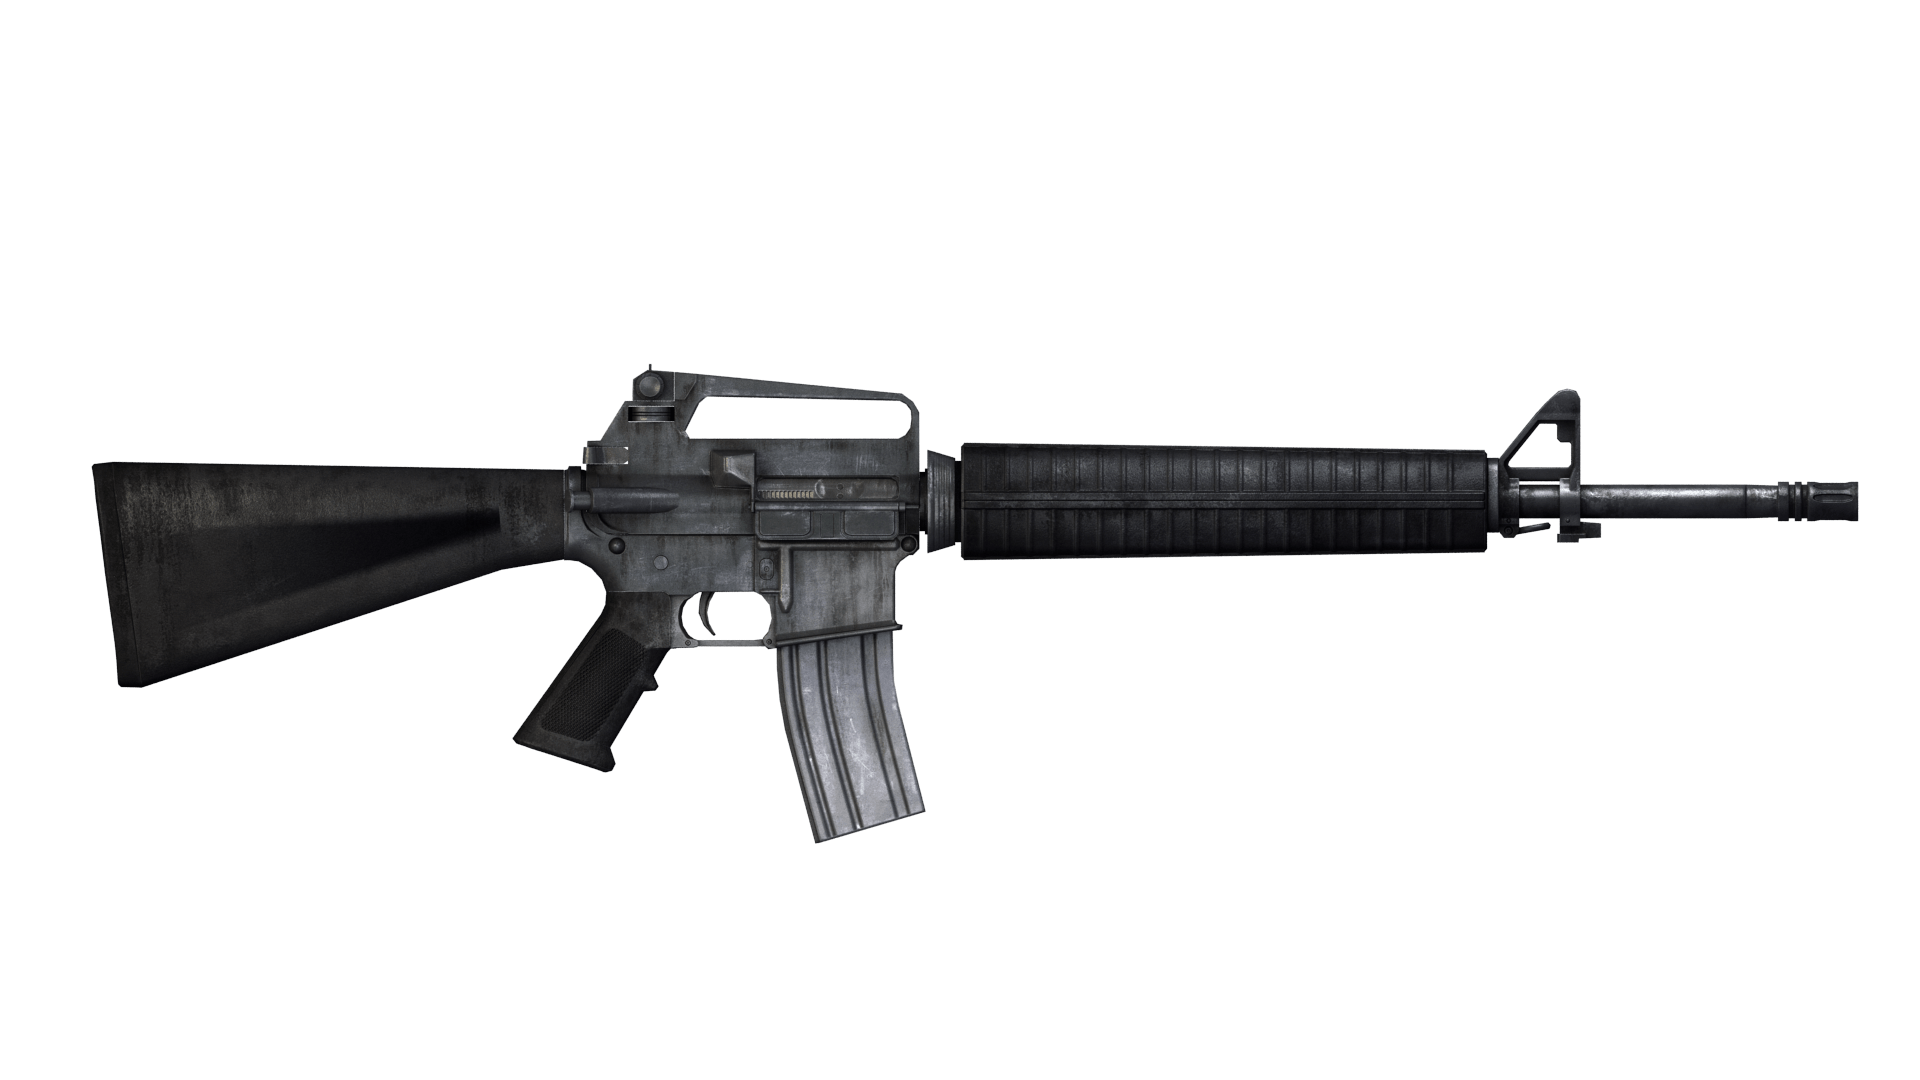 M16 Usa Assault Rifle Png PNG Image